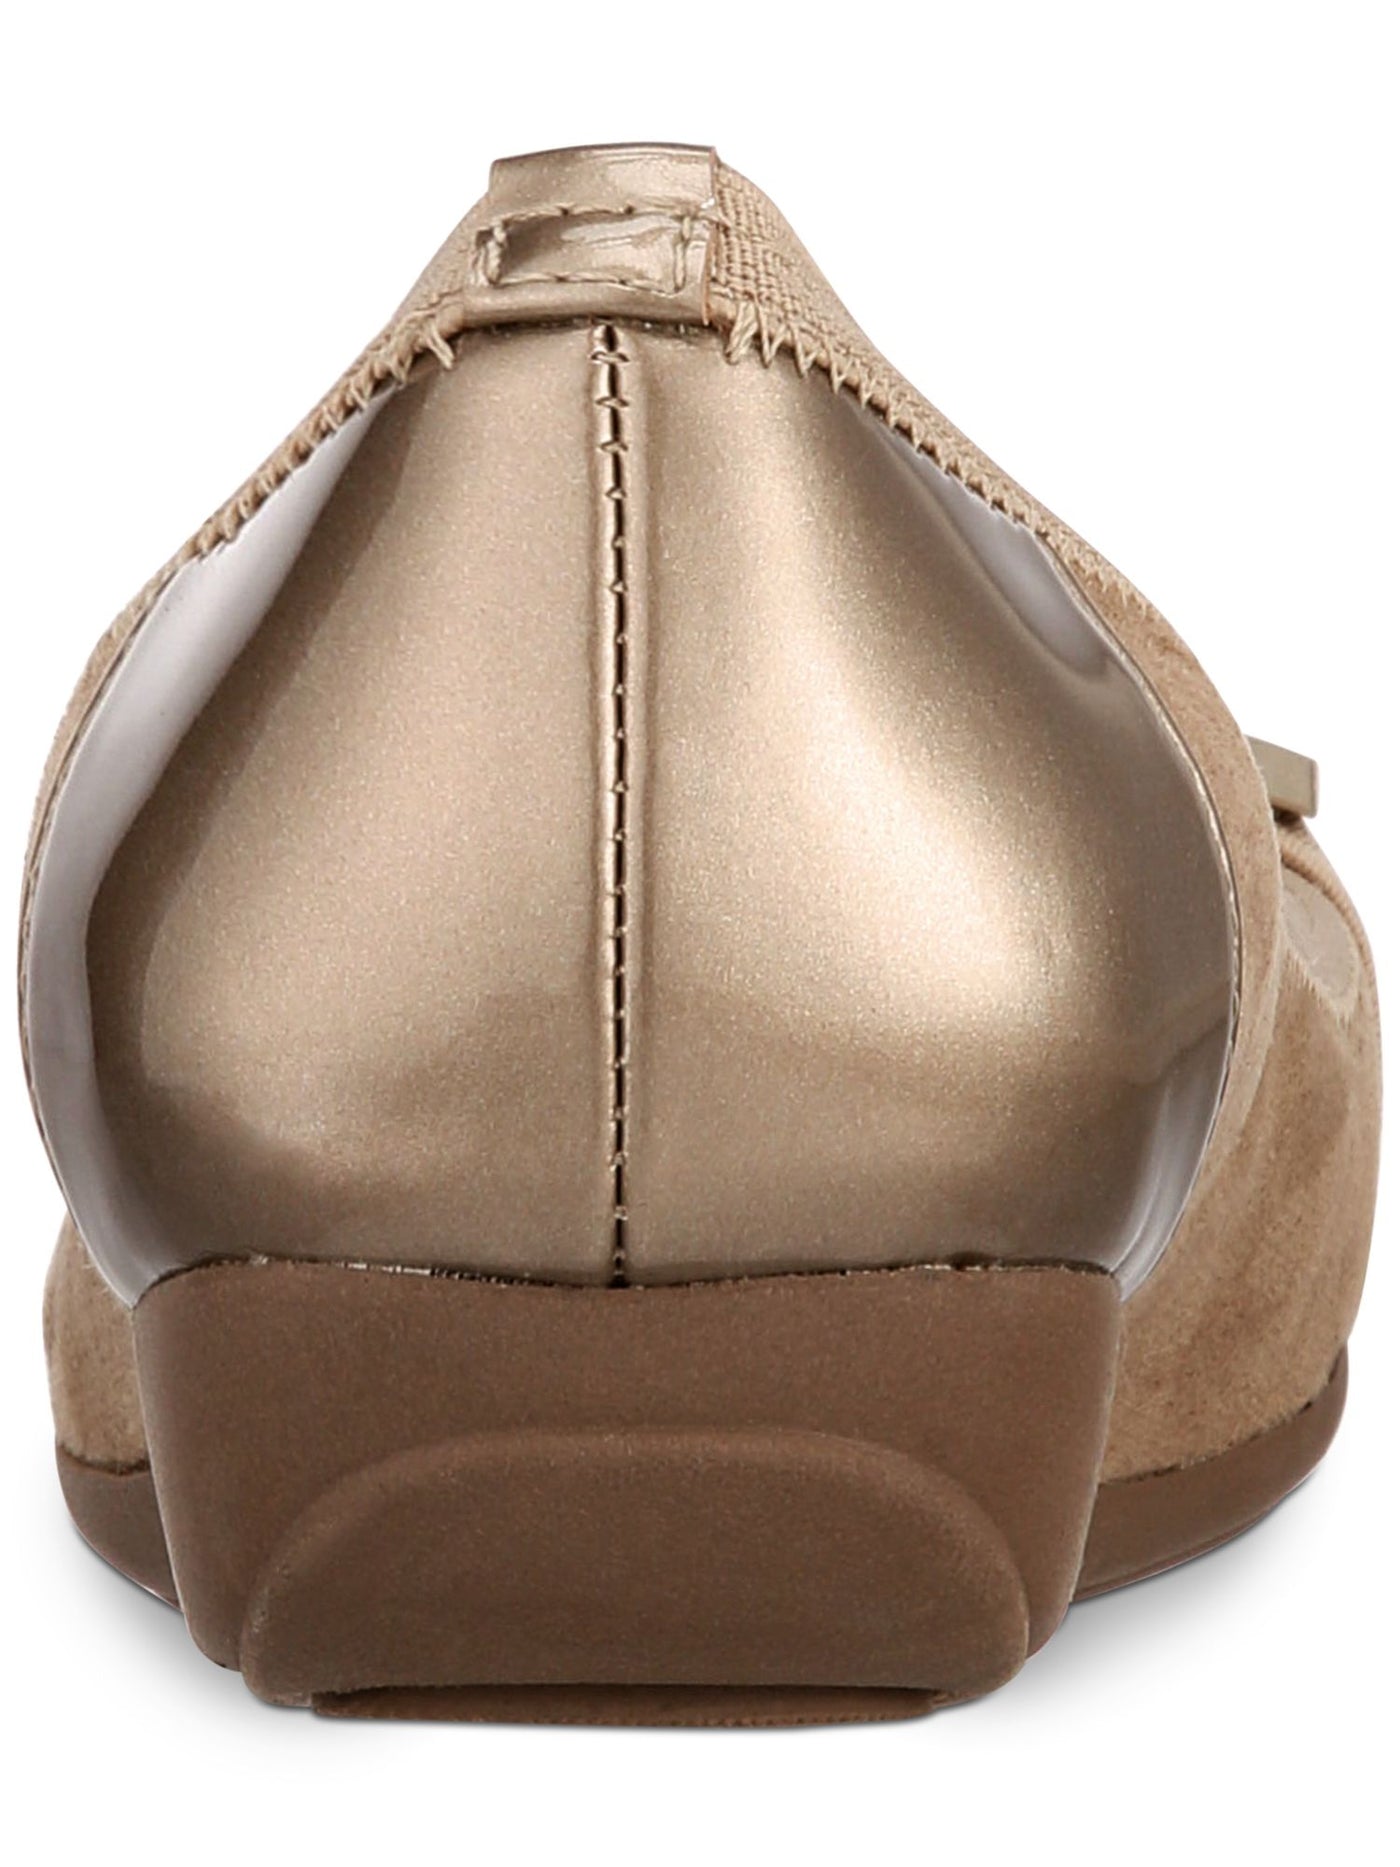 AK SPORT Womens Gold Metallic Hardware Detail Cushioned Uplift Square Toe Wedge Slip On Flats Shoes 5 M